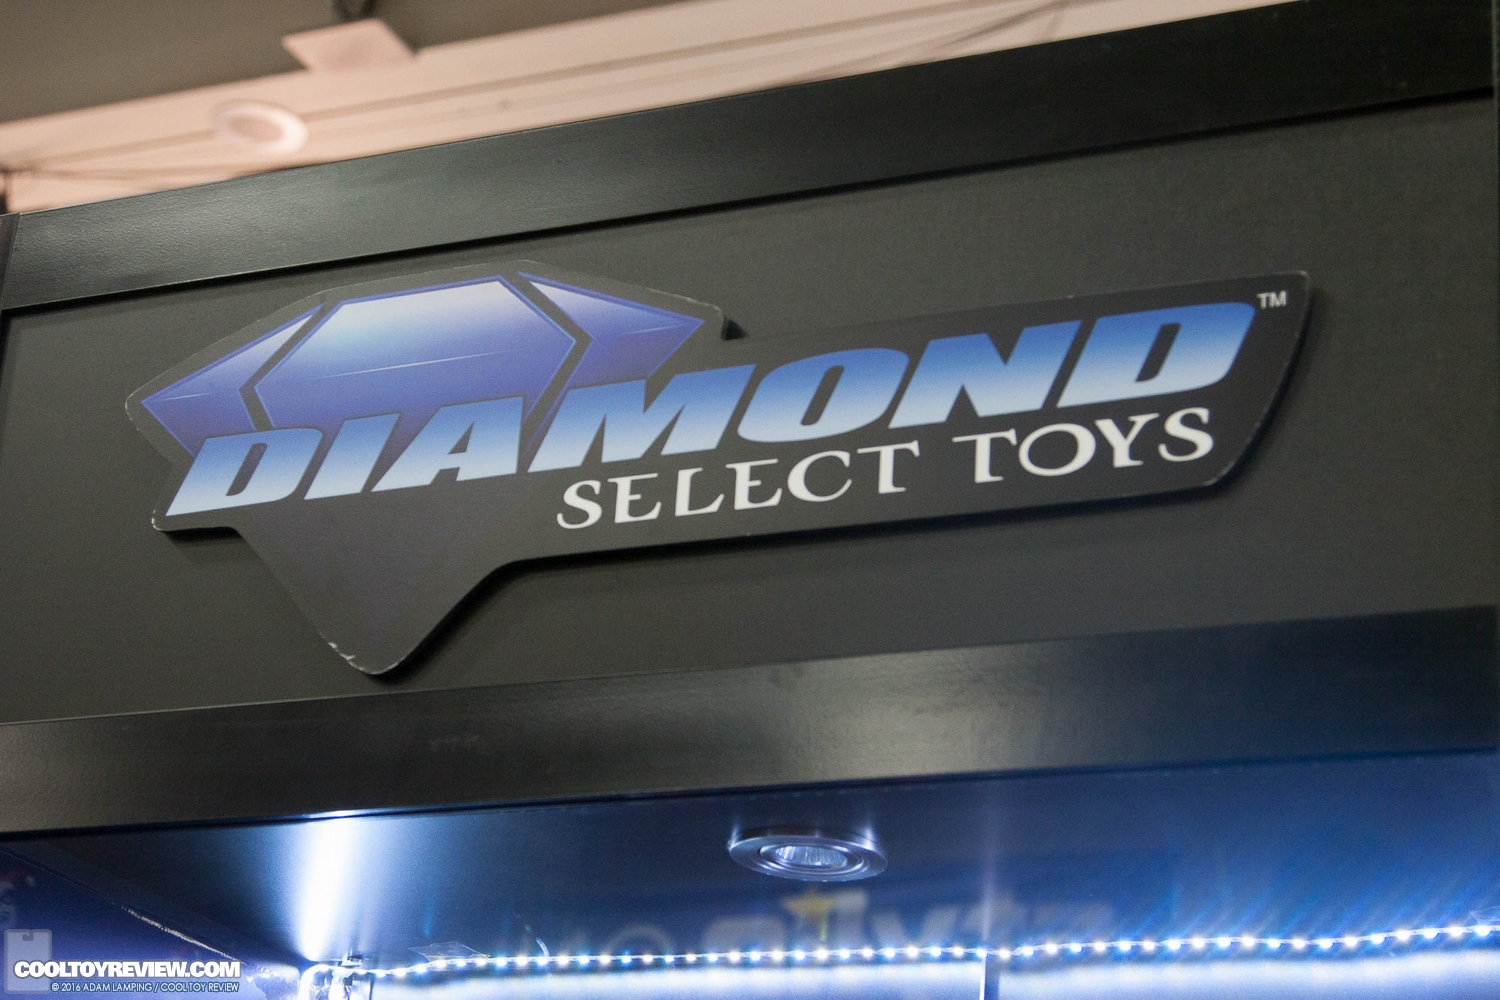 san-diego-comic-con-diamond-select-toys-booth-001.jpg